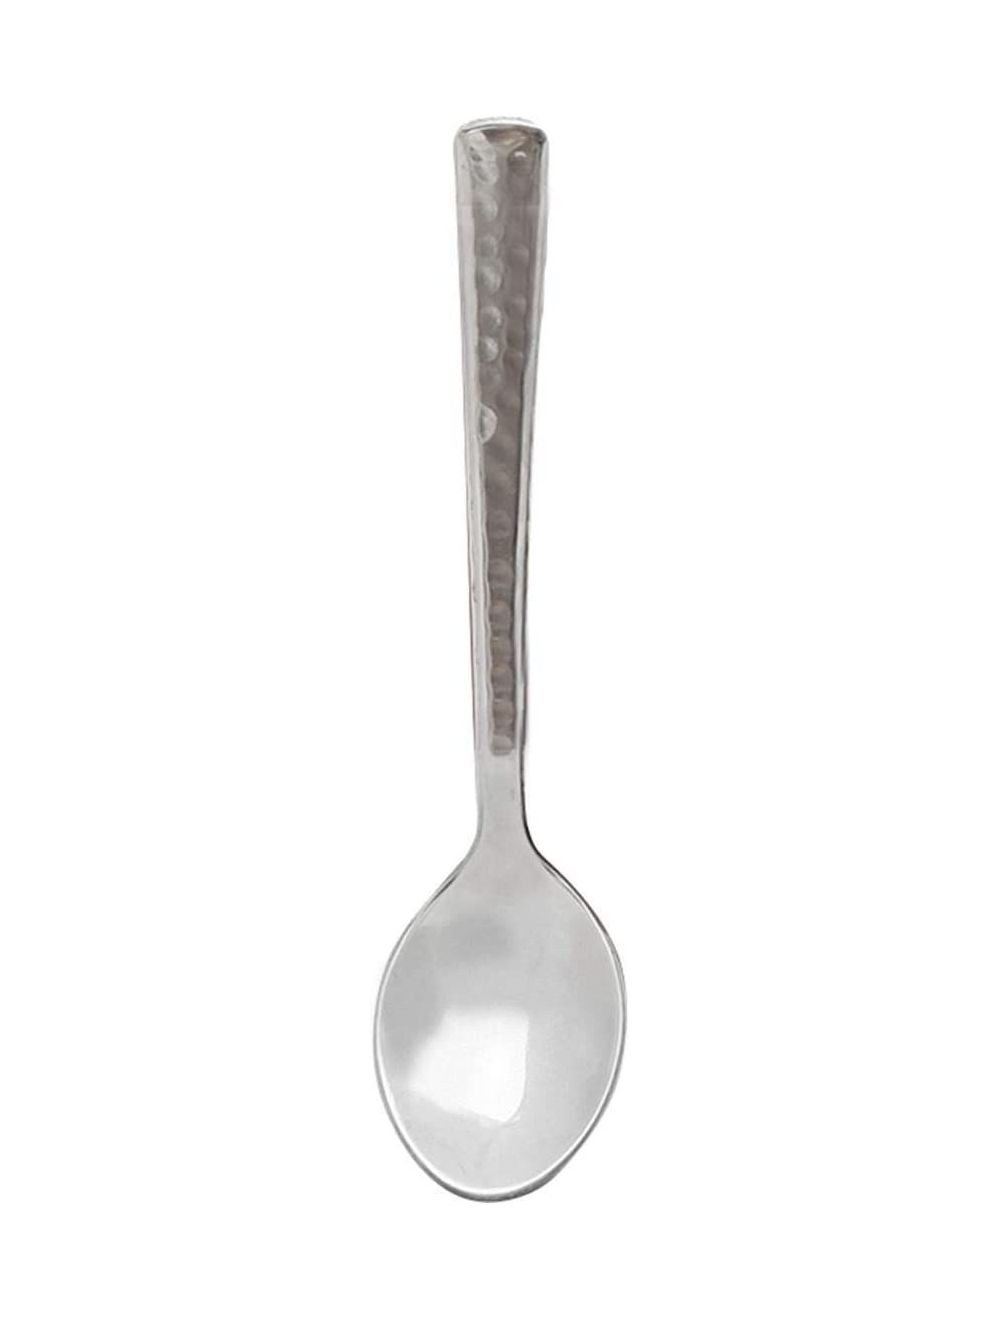 Raj Hammered Tea Spoon 6 Piece Set-RHTS06,Silver